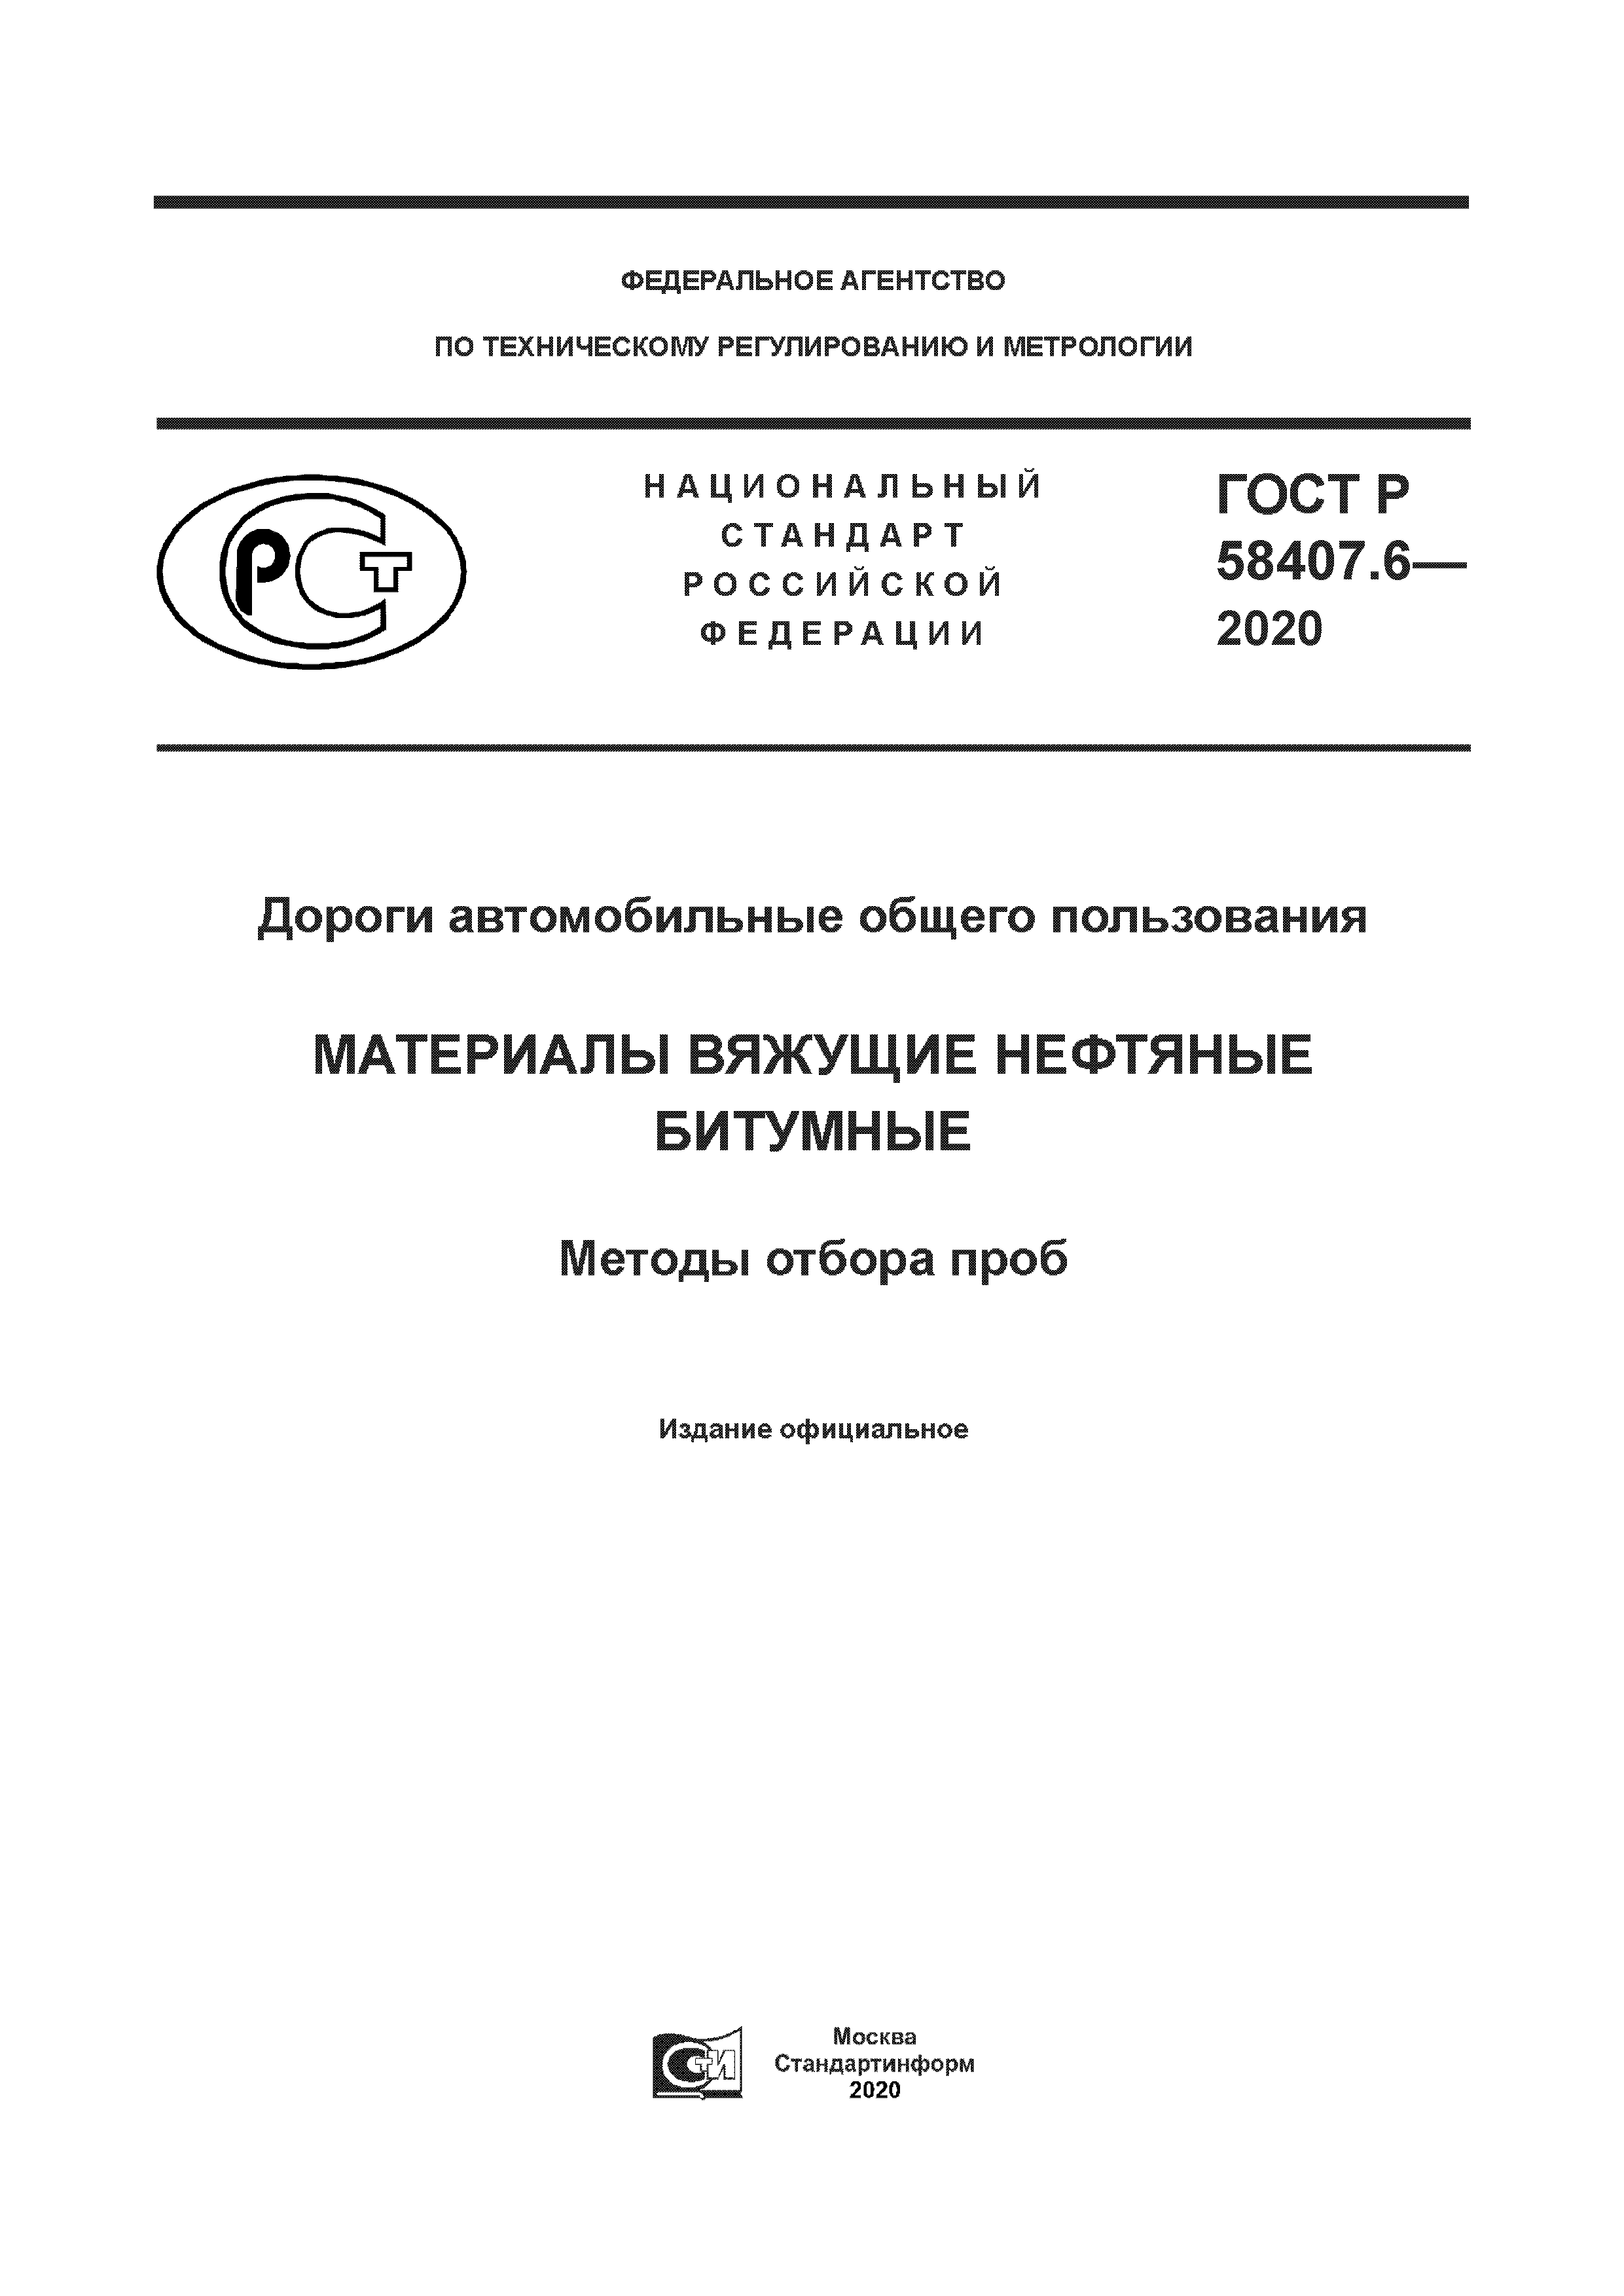 ГОСТ Р 58407.6-2020